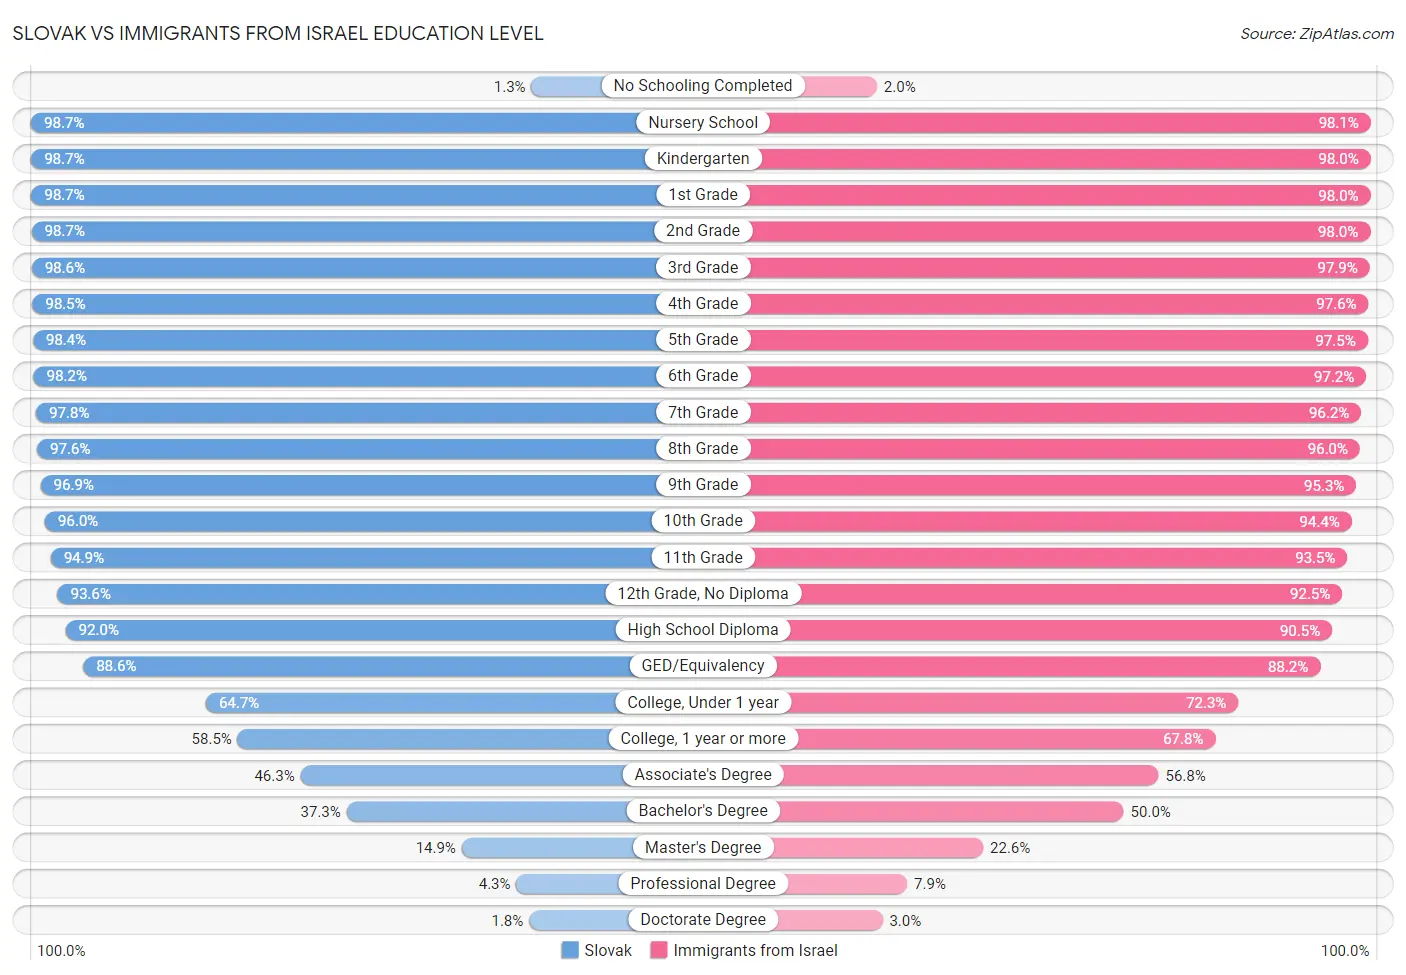 Slovak vs Immigrants from Israel Education Level